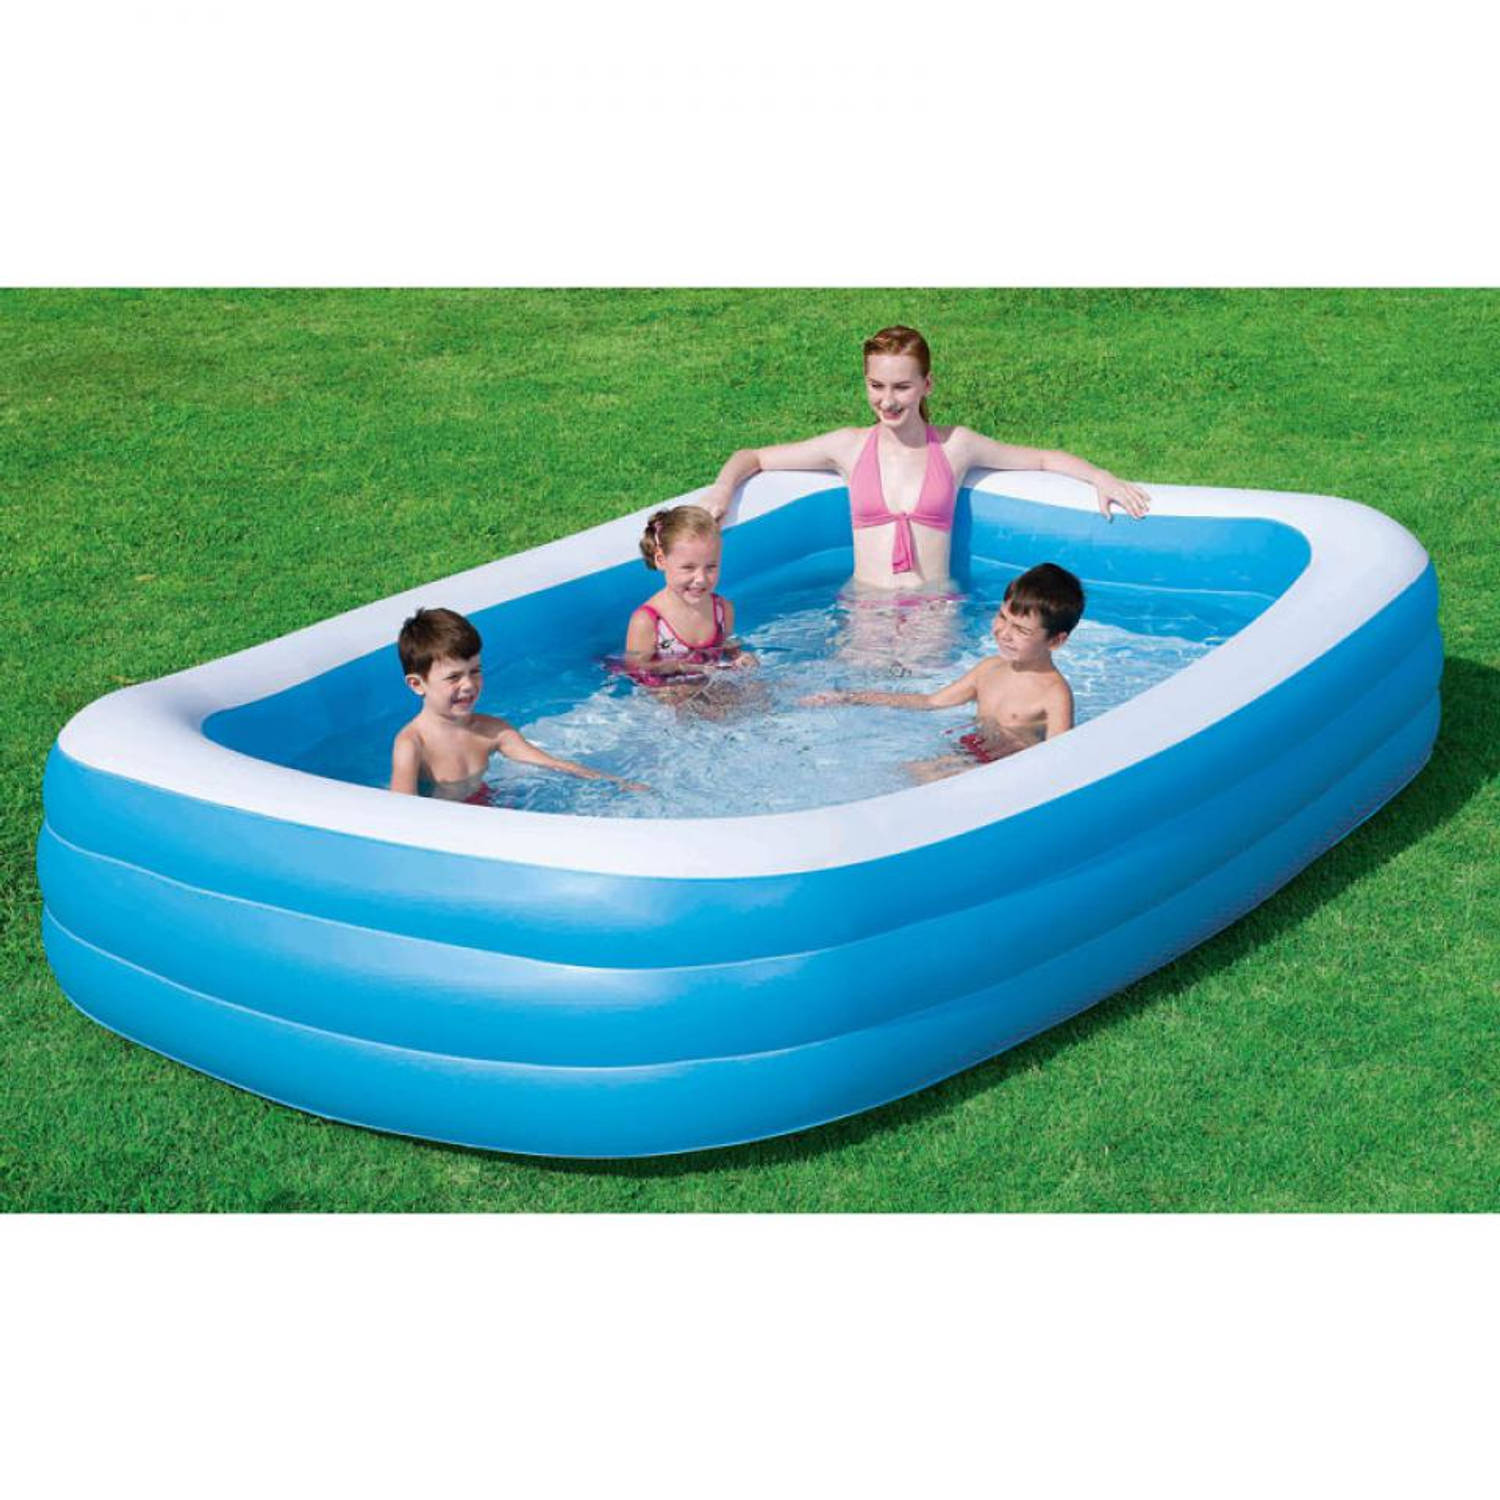 Bestway familiezwembad 305x180x55 cm - blauw | Blokker